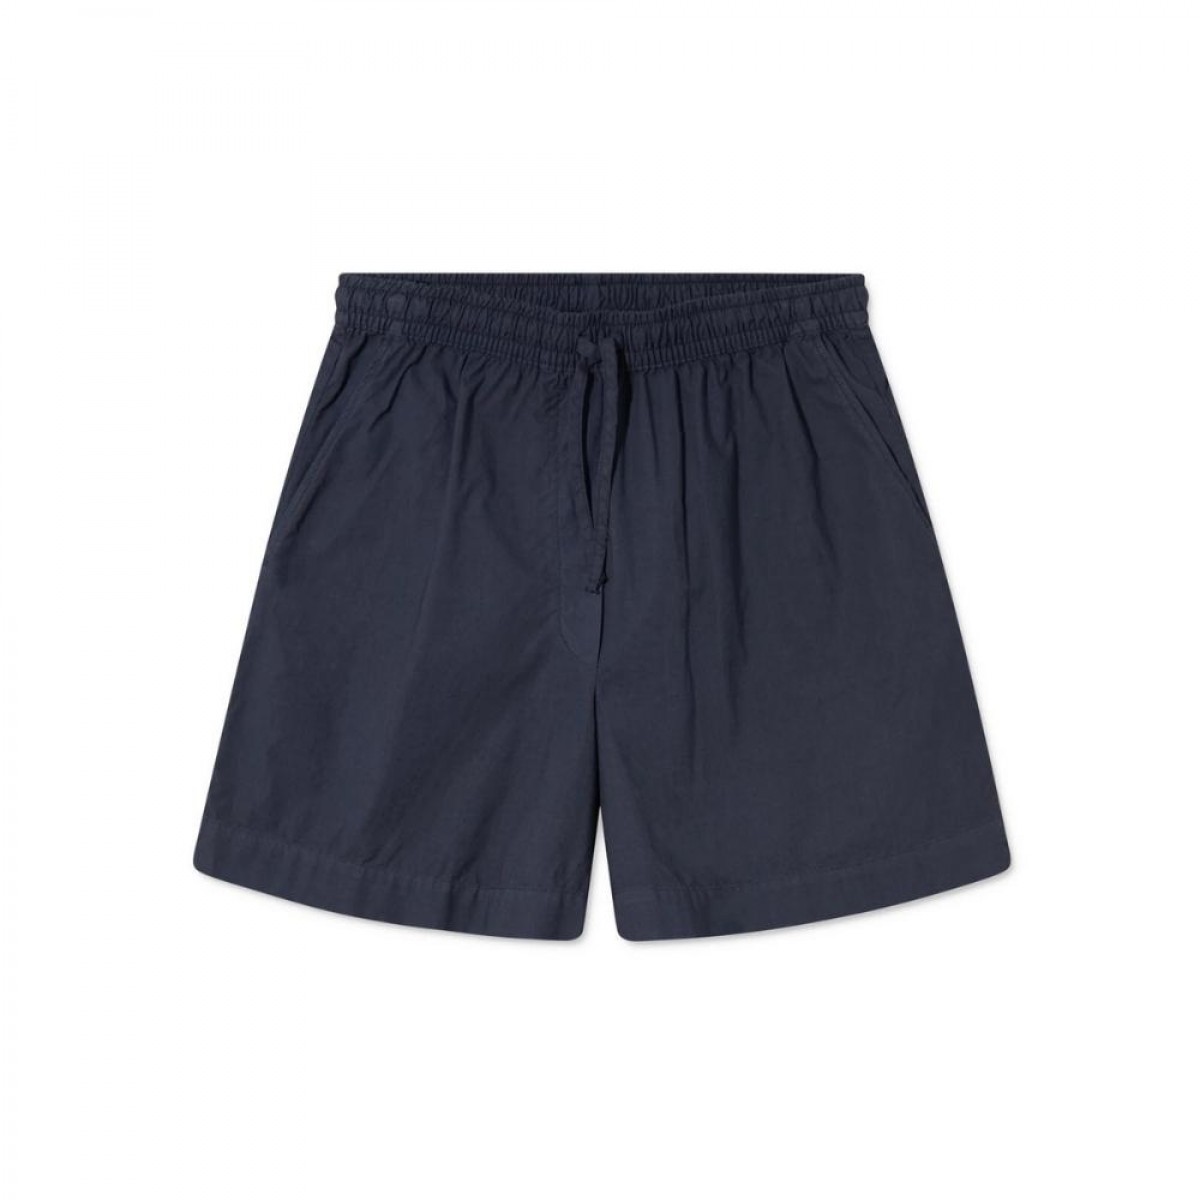 petri gmth shorts - navy - front